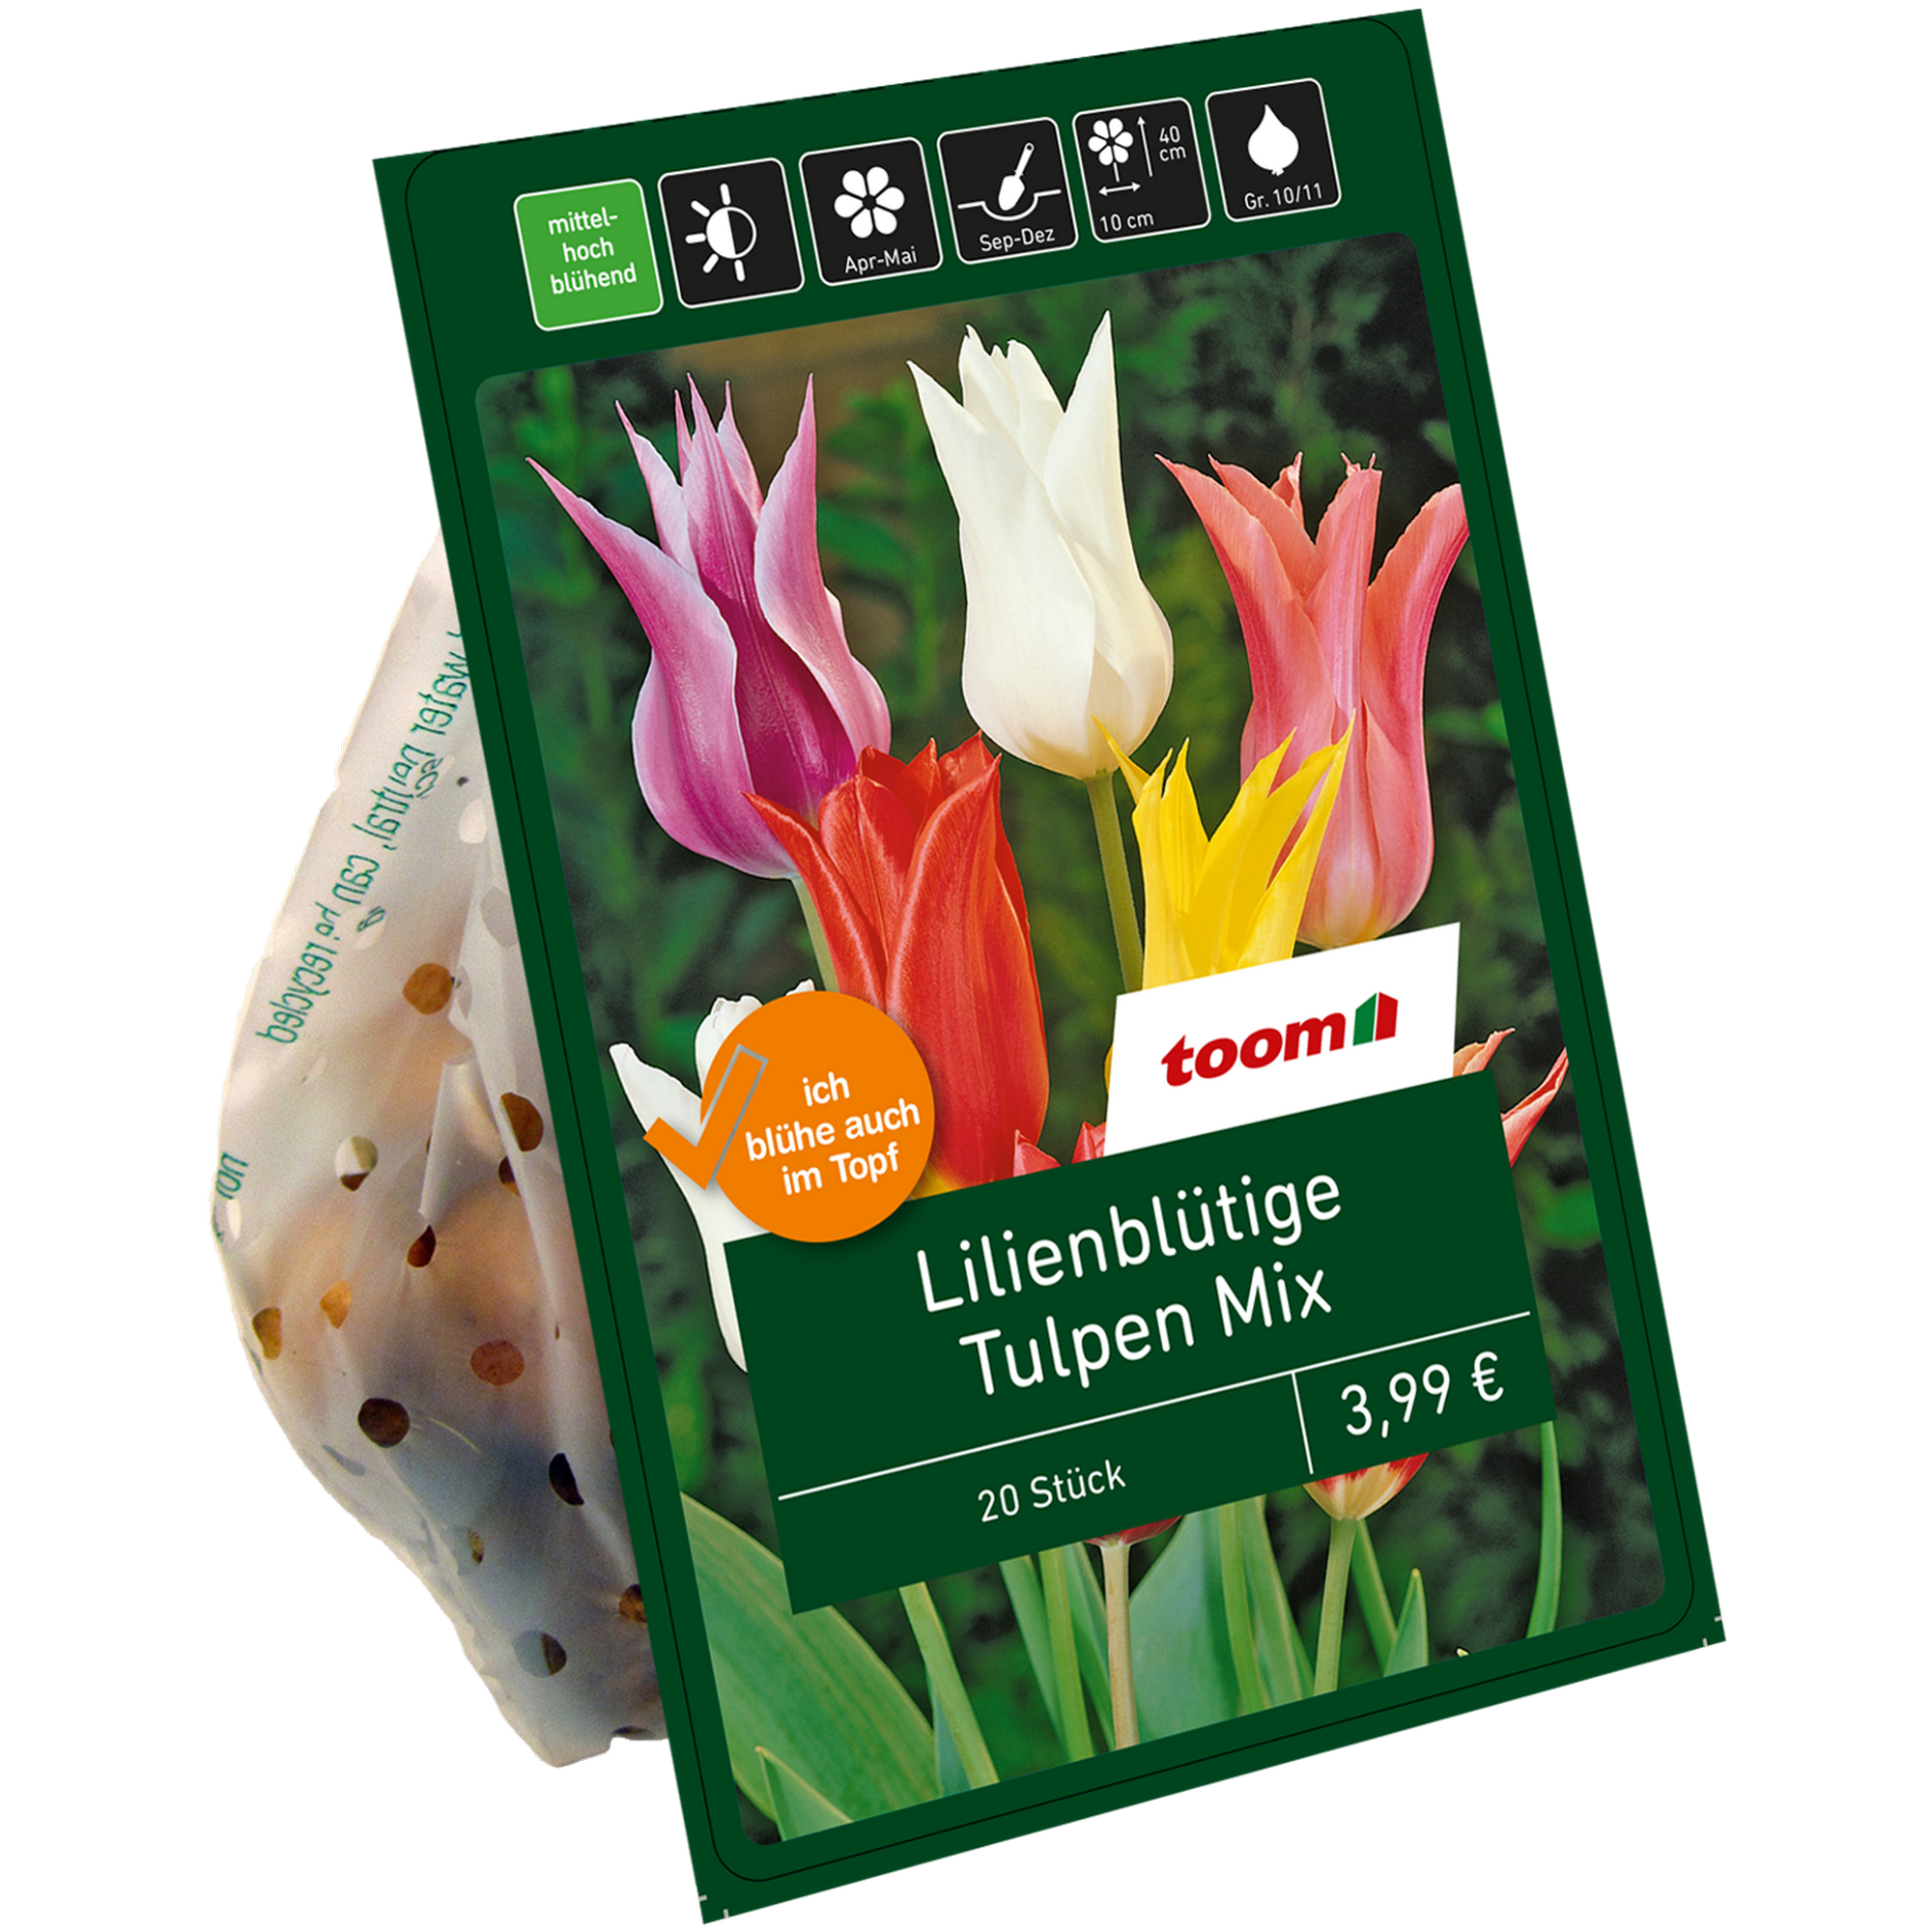 Lilienblütige Tulpen 'Mix' 20 Zwiebeln + product picture